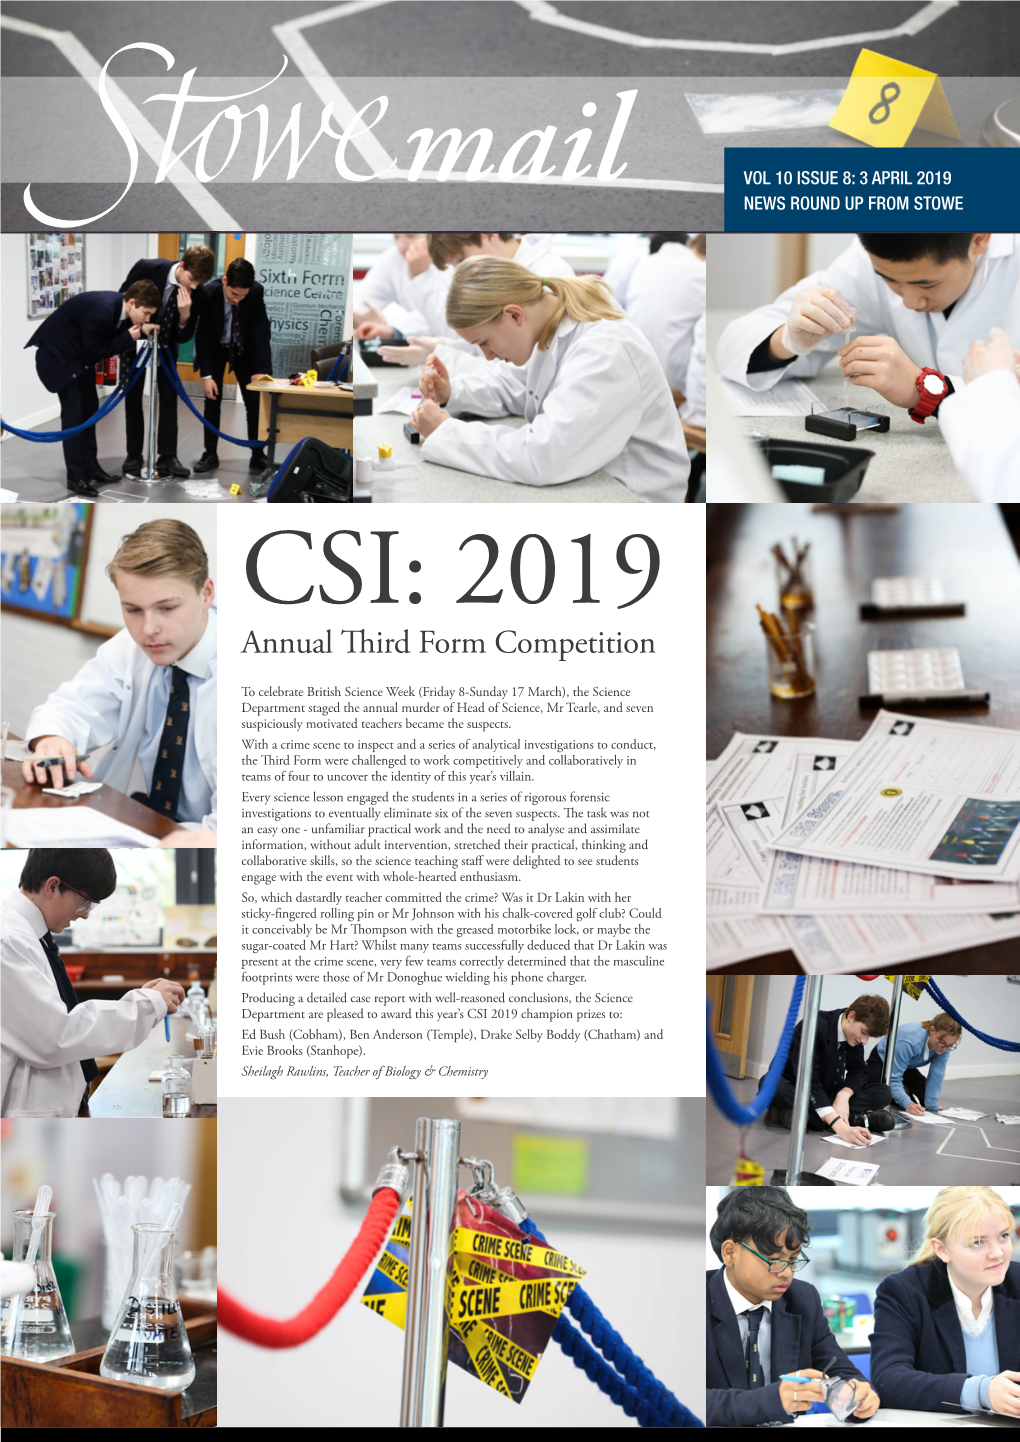 CSI: 2019 Annual Third Form Competition